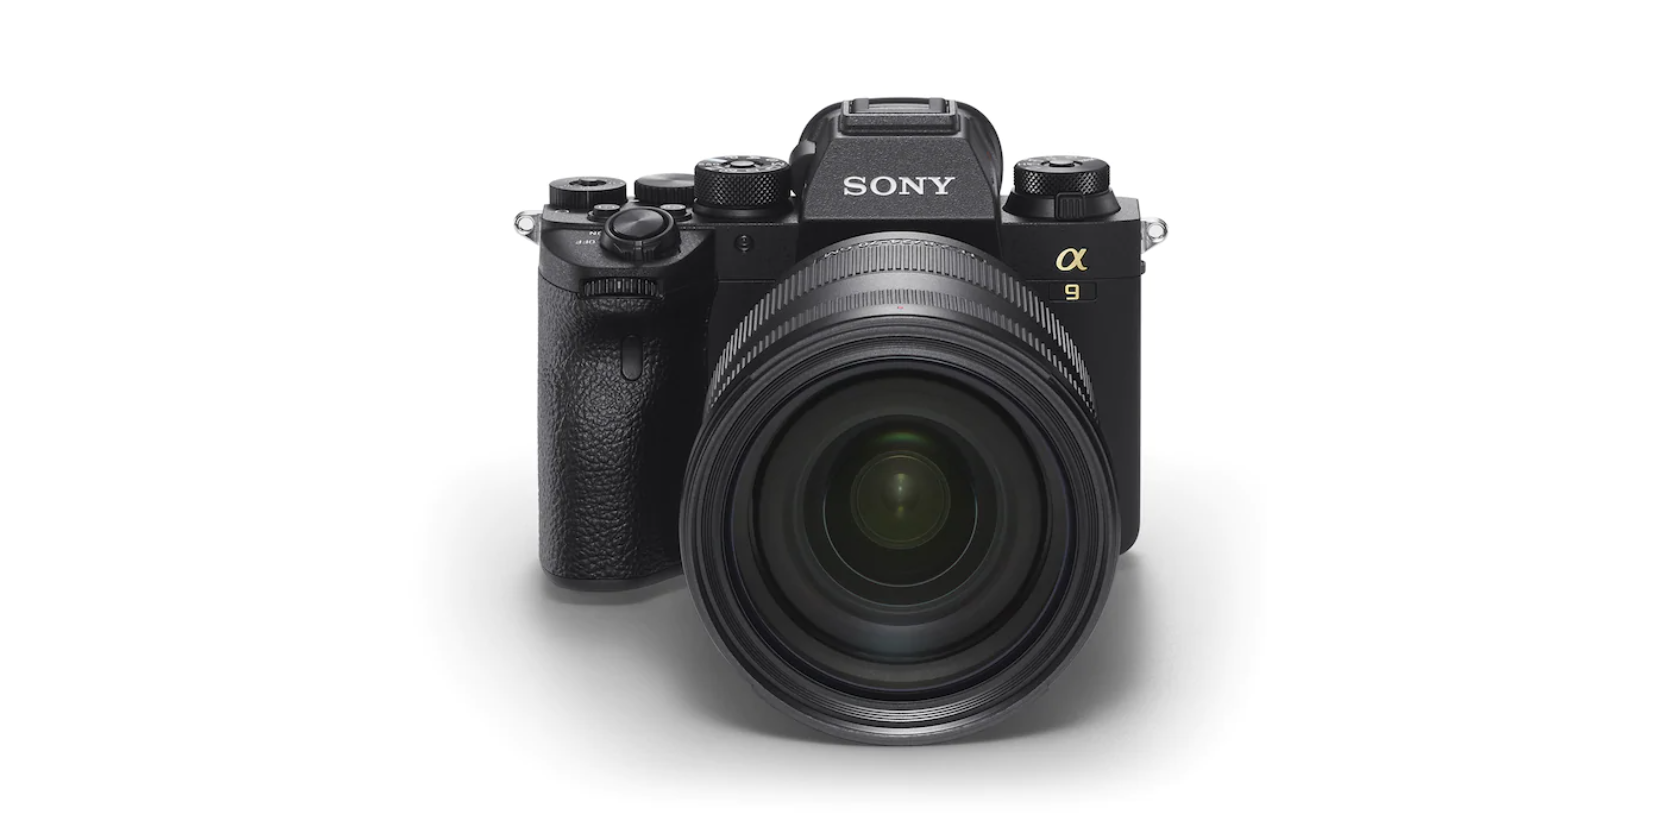 The Sony a9 II mirrorless camera